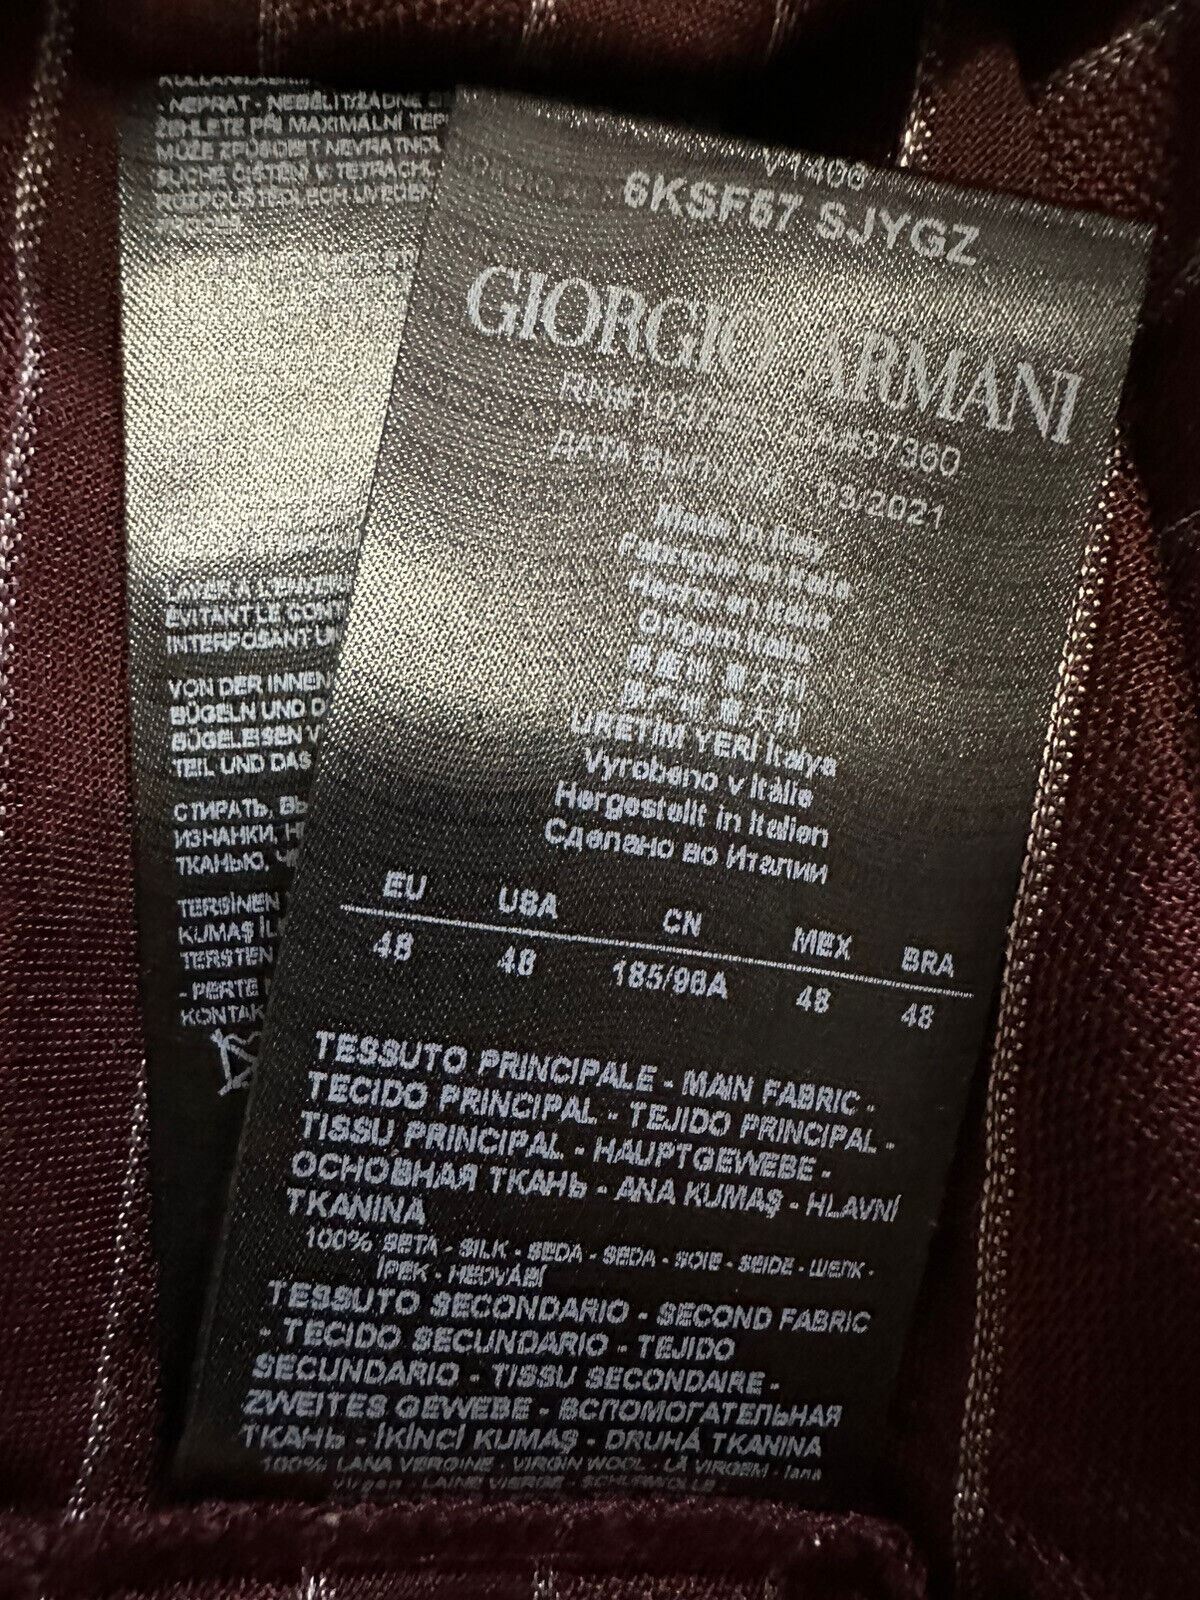 NWT $1025 Giorgio Armani Mens Silk T Shirt Burgundy 38 US/48 Eu ( S ) Italy